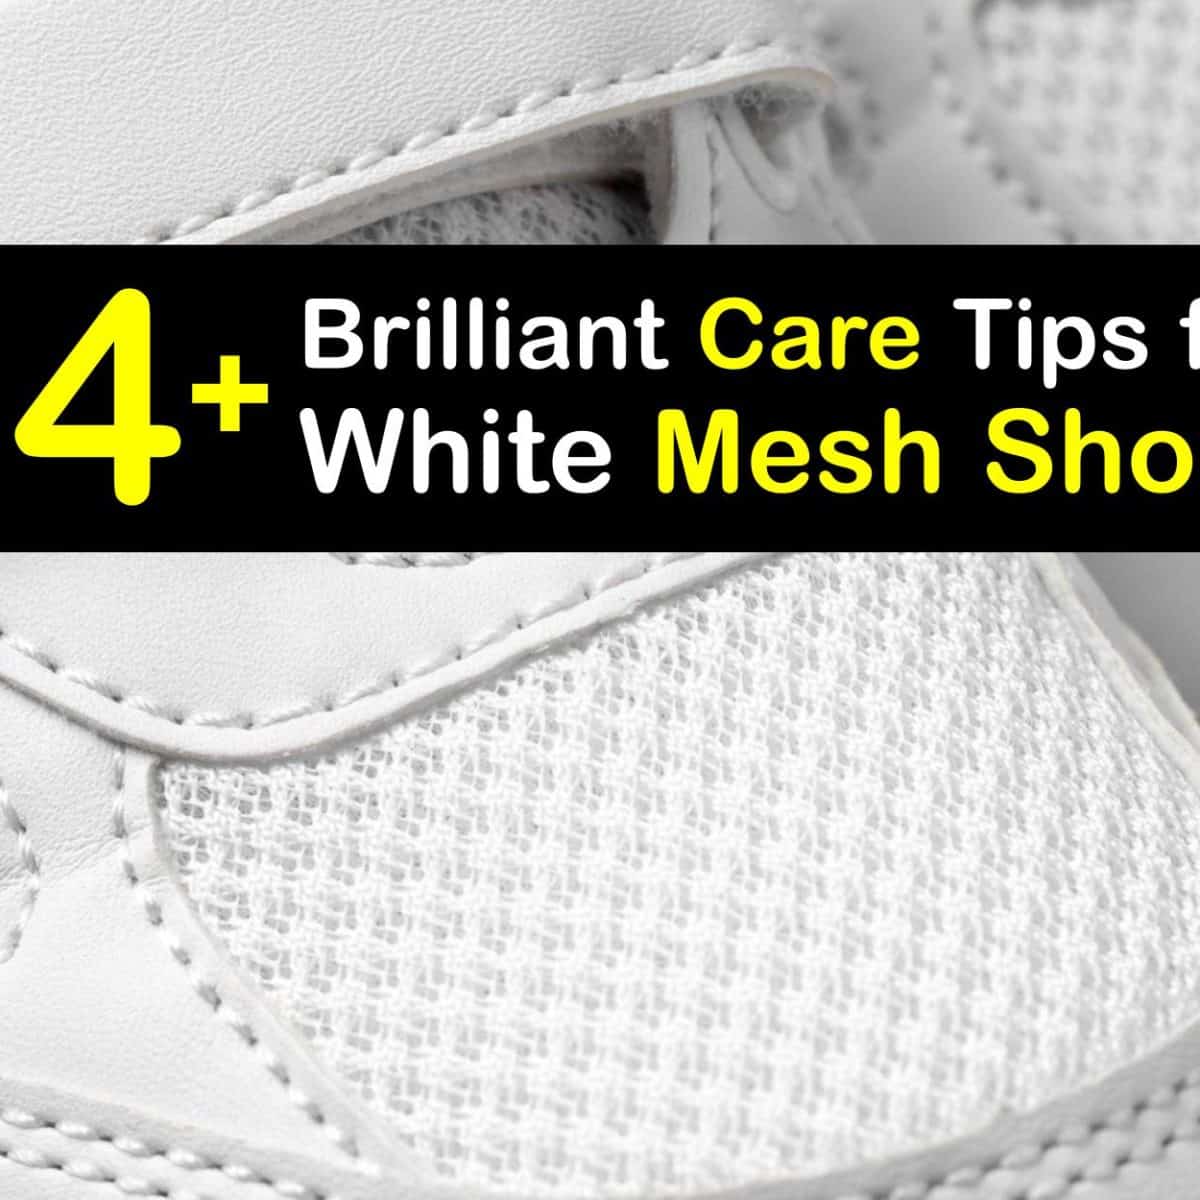 White Mesh Care - Smart Guide for White Mesh Sneakers